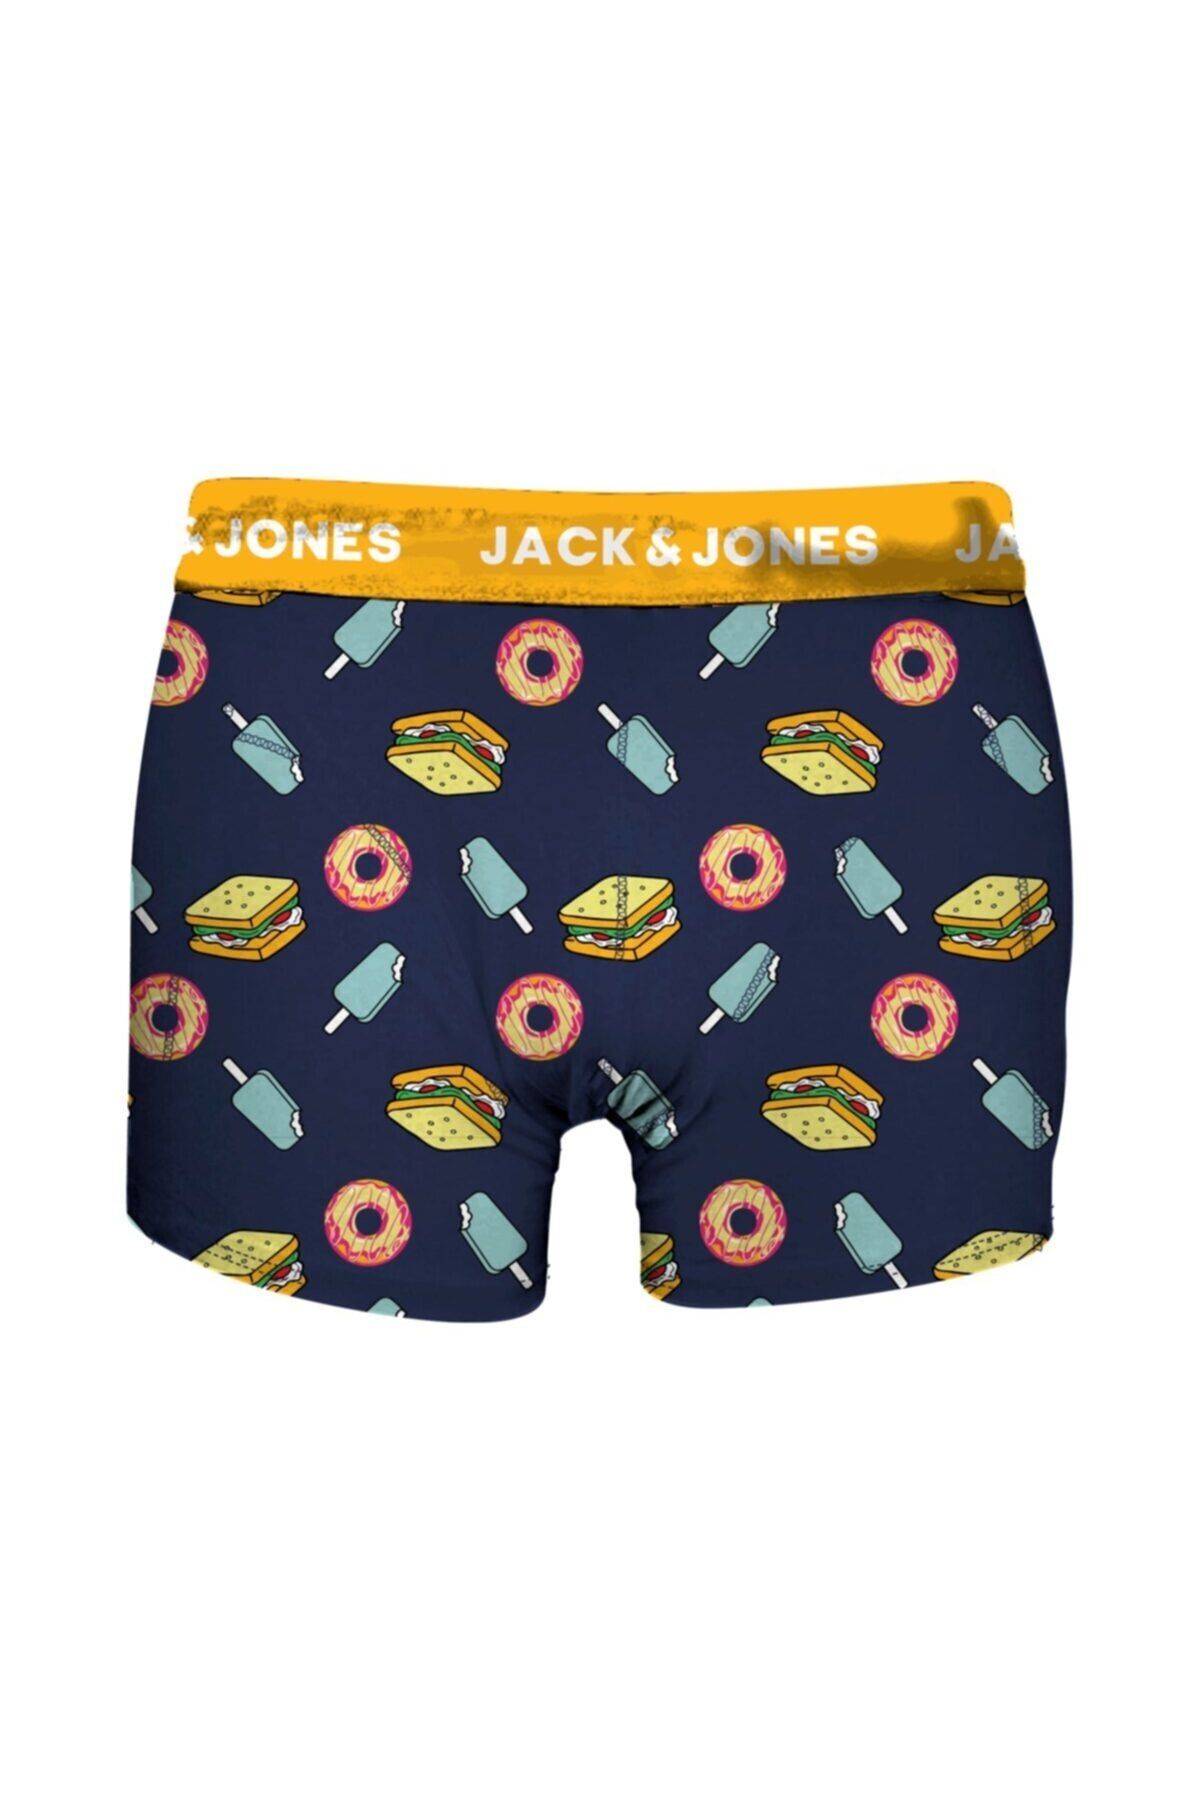 Jack & Jones Jacfast Trunks Try